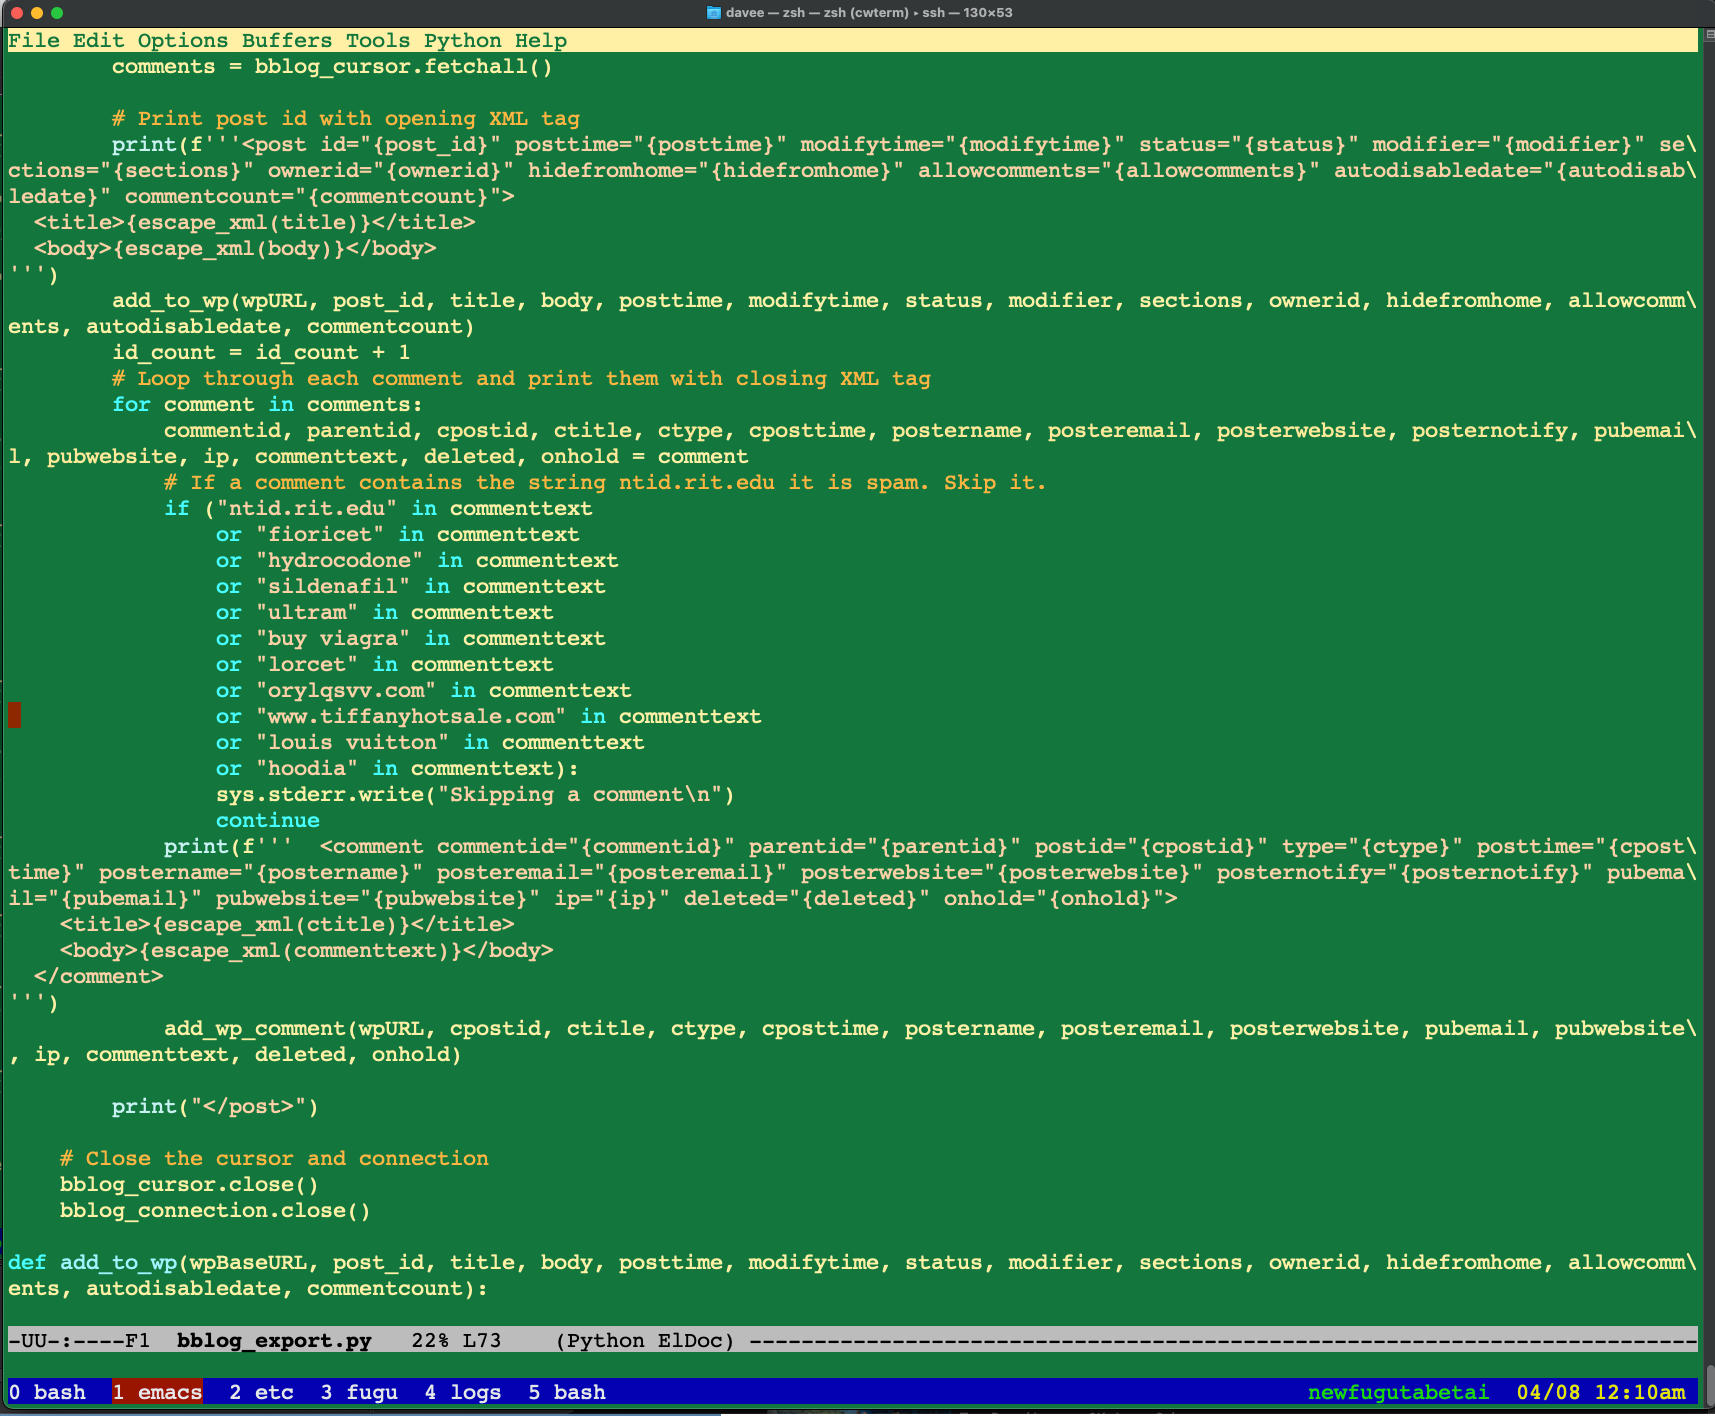 Emacs screenshot of a python script